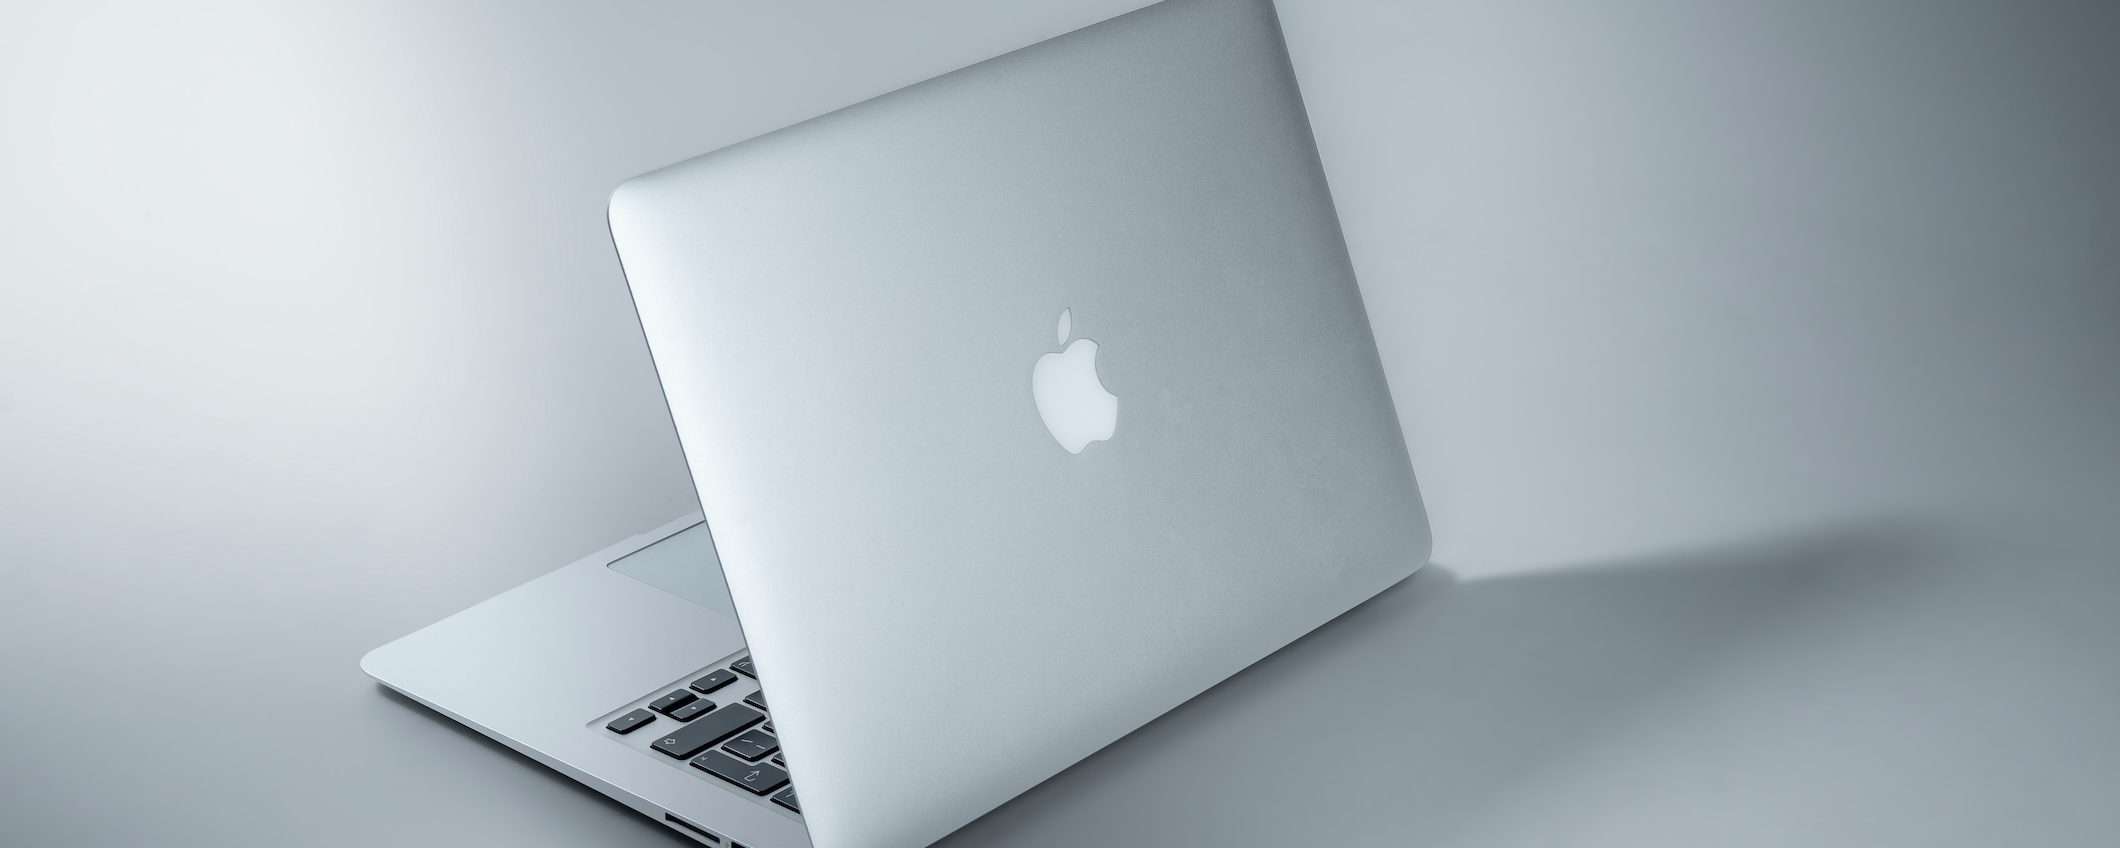 MacBook: Apple lancerà due modelli low cost